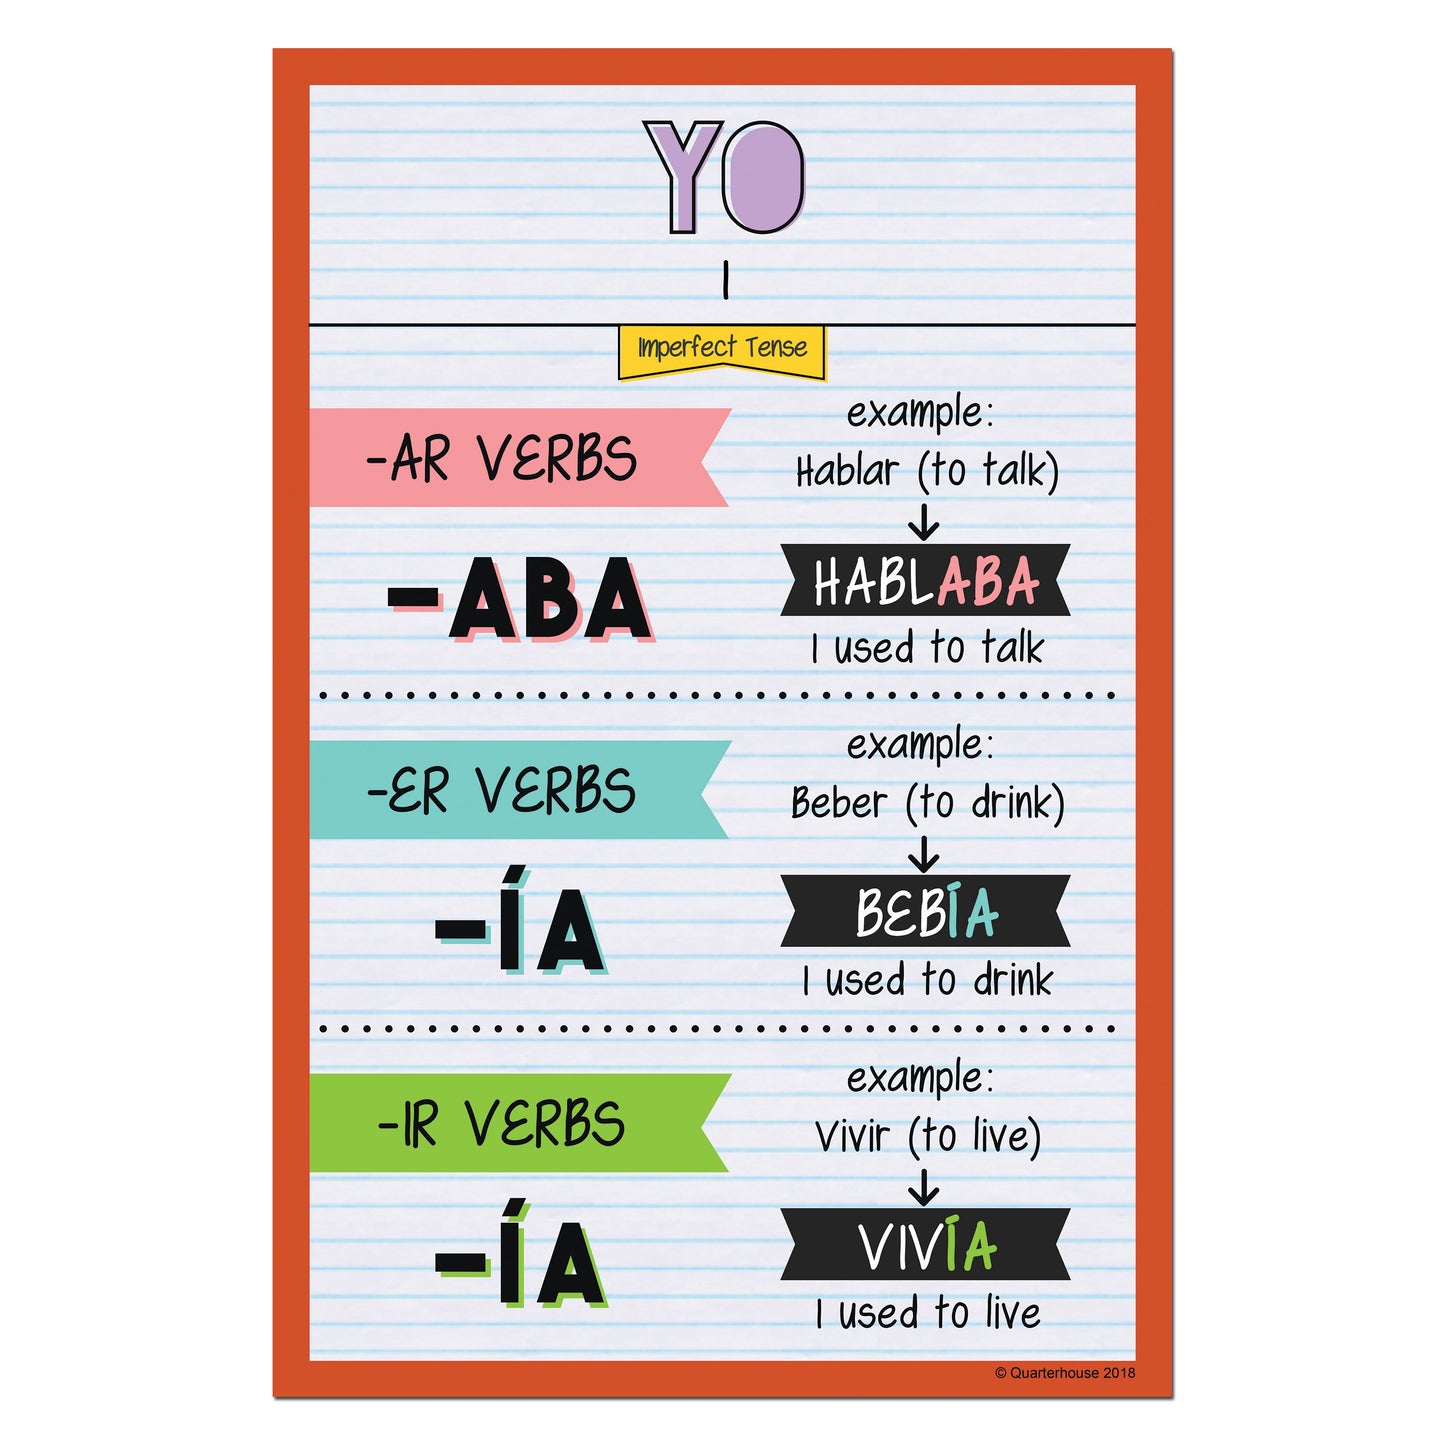 Quarterhouse Yo - Imperfect Tense Spanish Verb Conjugation Poster, Spanish and ESL Classroom Materials for Teachers